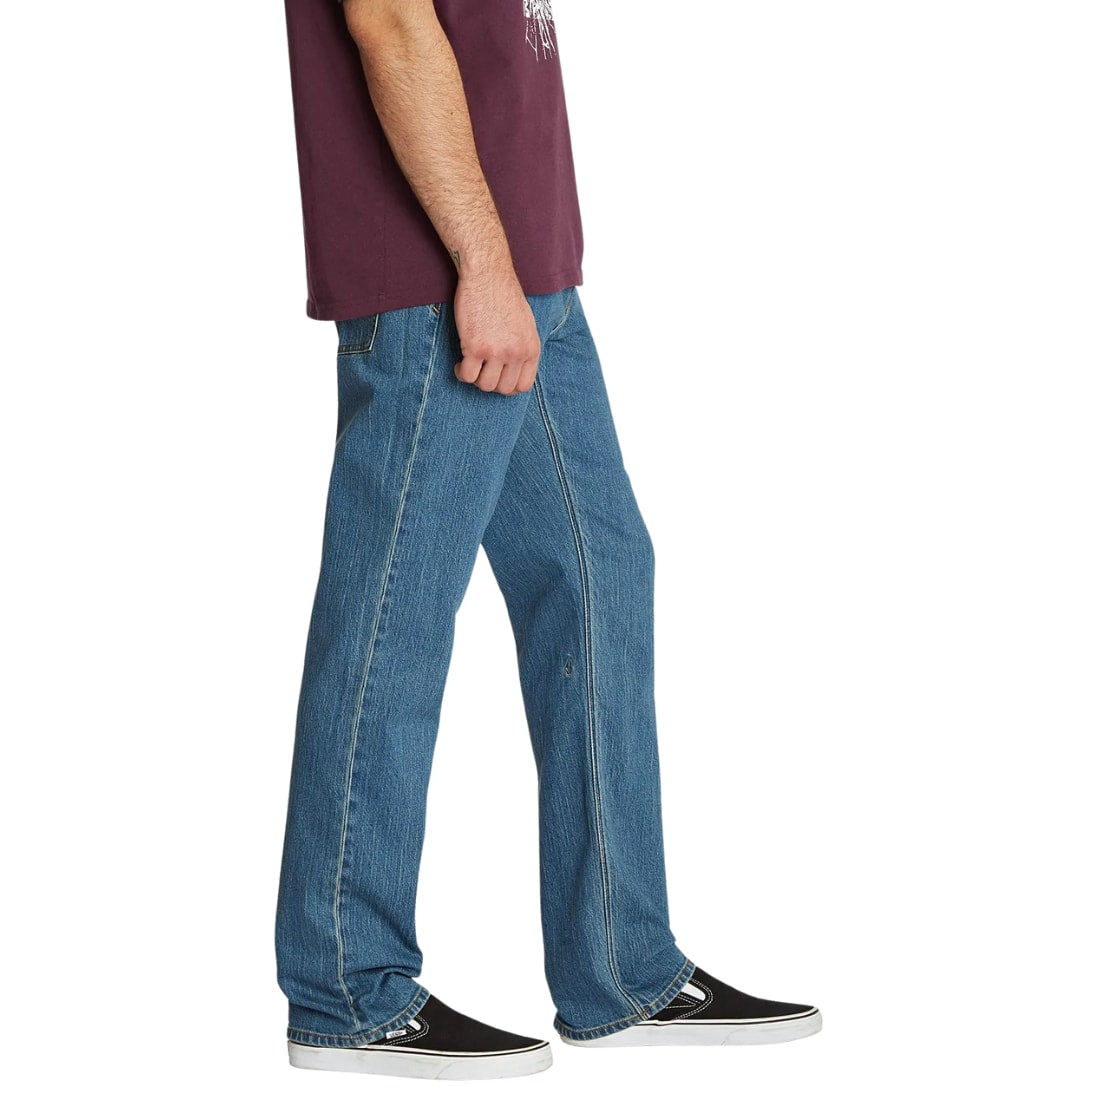 Volcom Solver Denim - Aged Indigo - Mens Regular/Straight Denim Jeans by Volcom